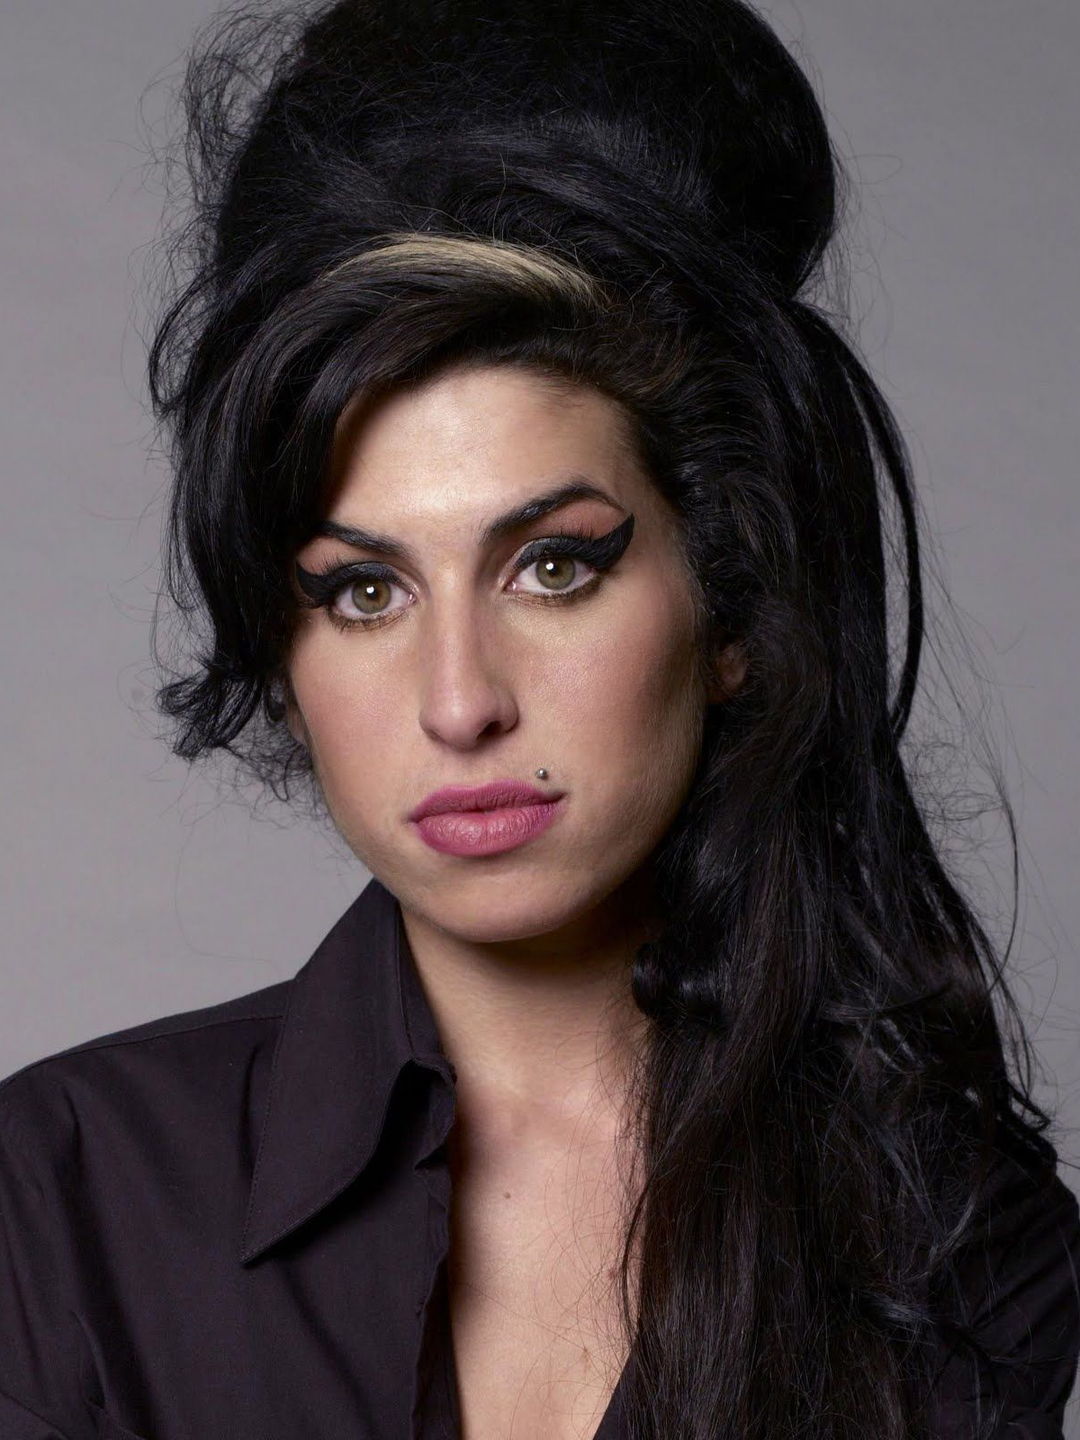 Amy Winehouse life story